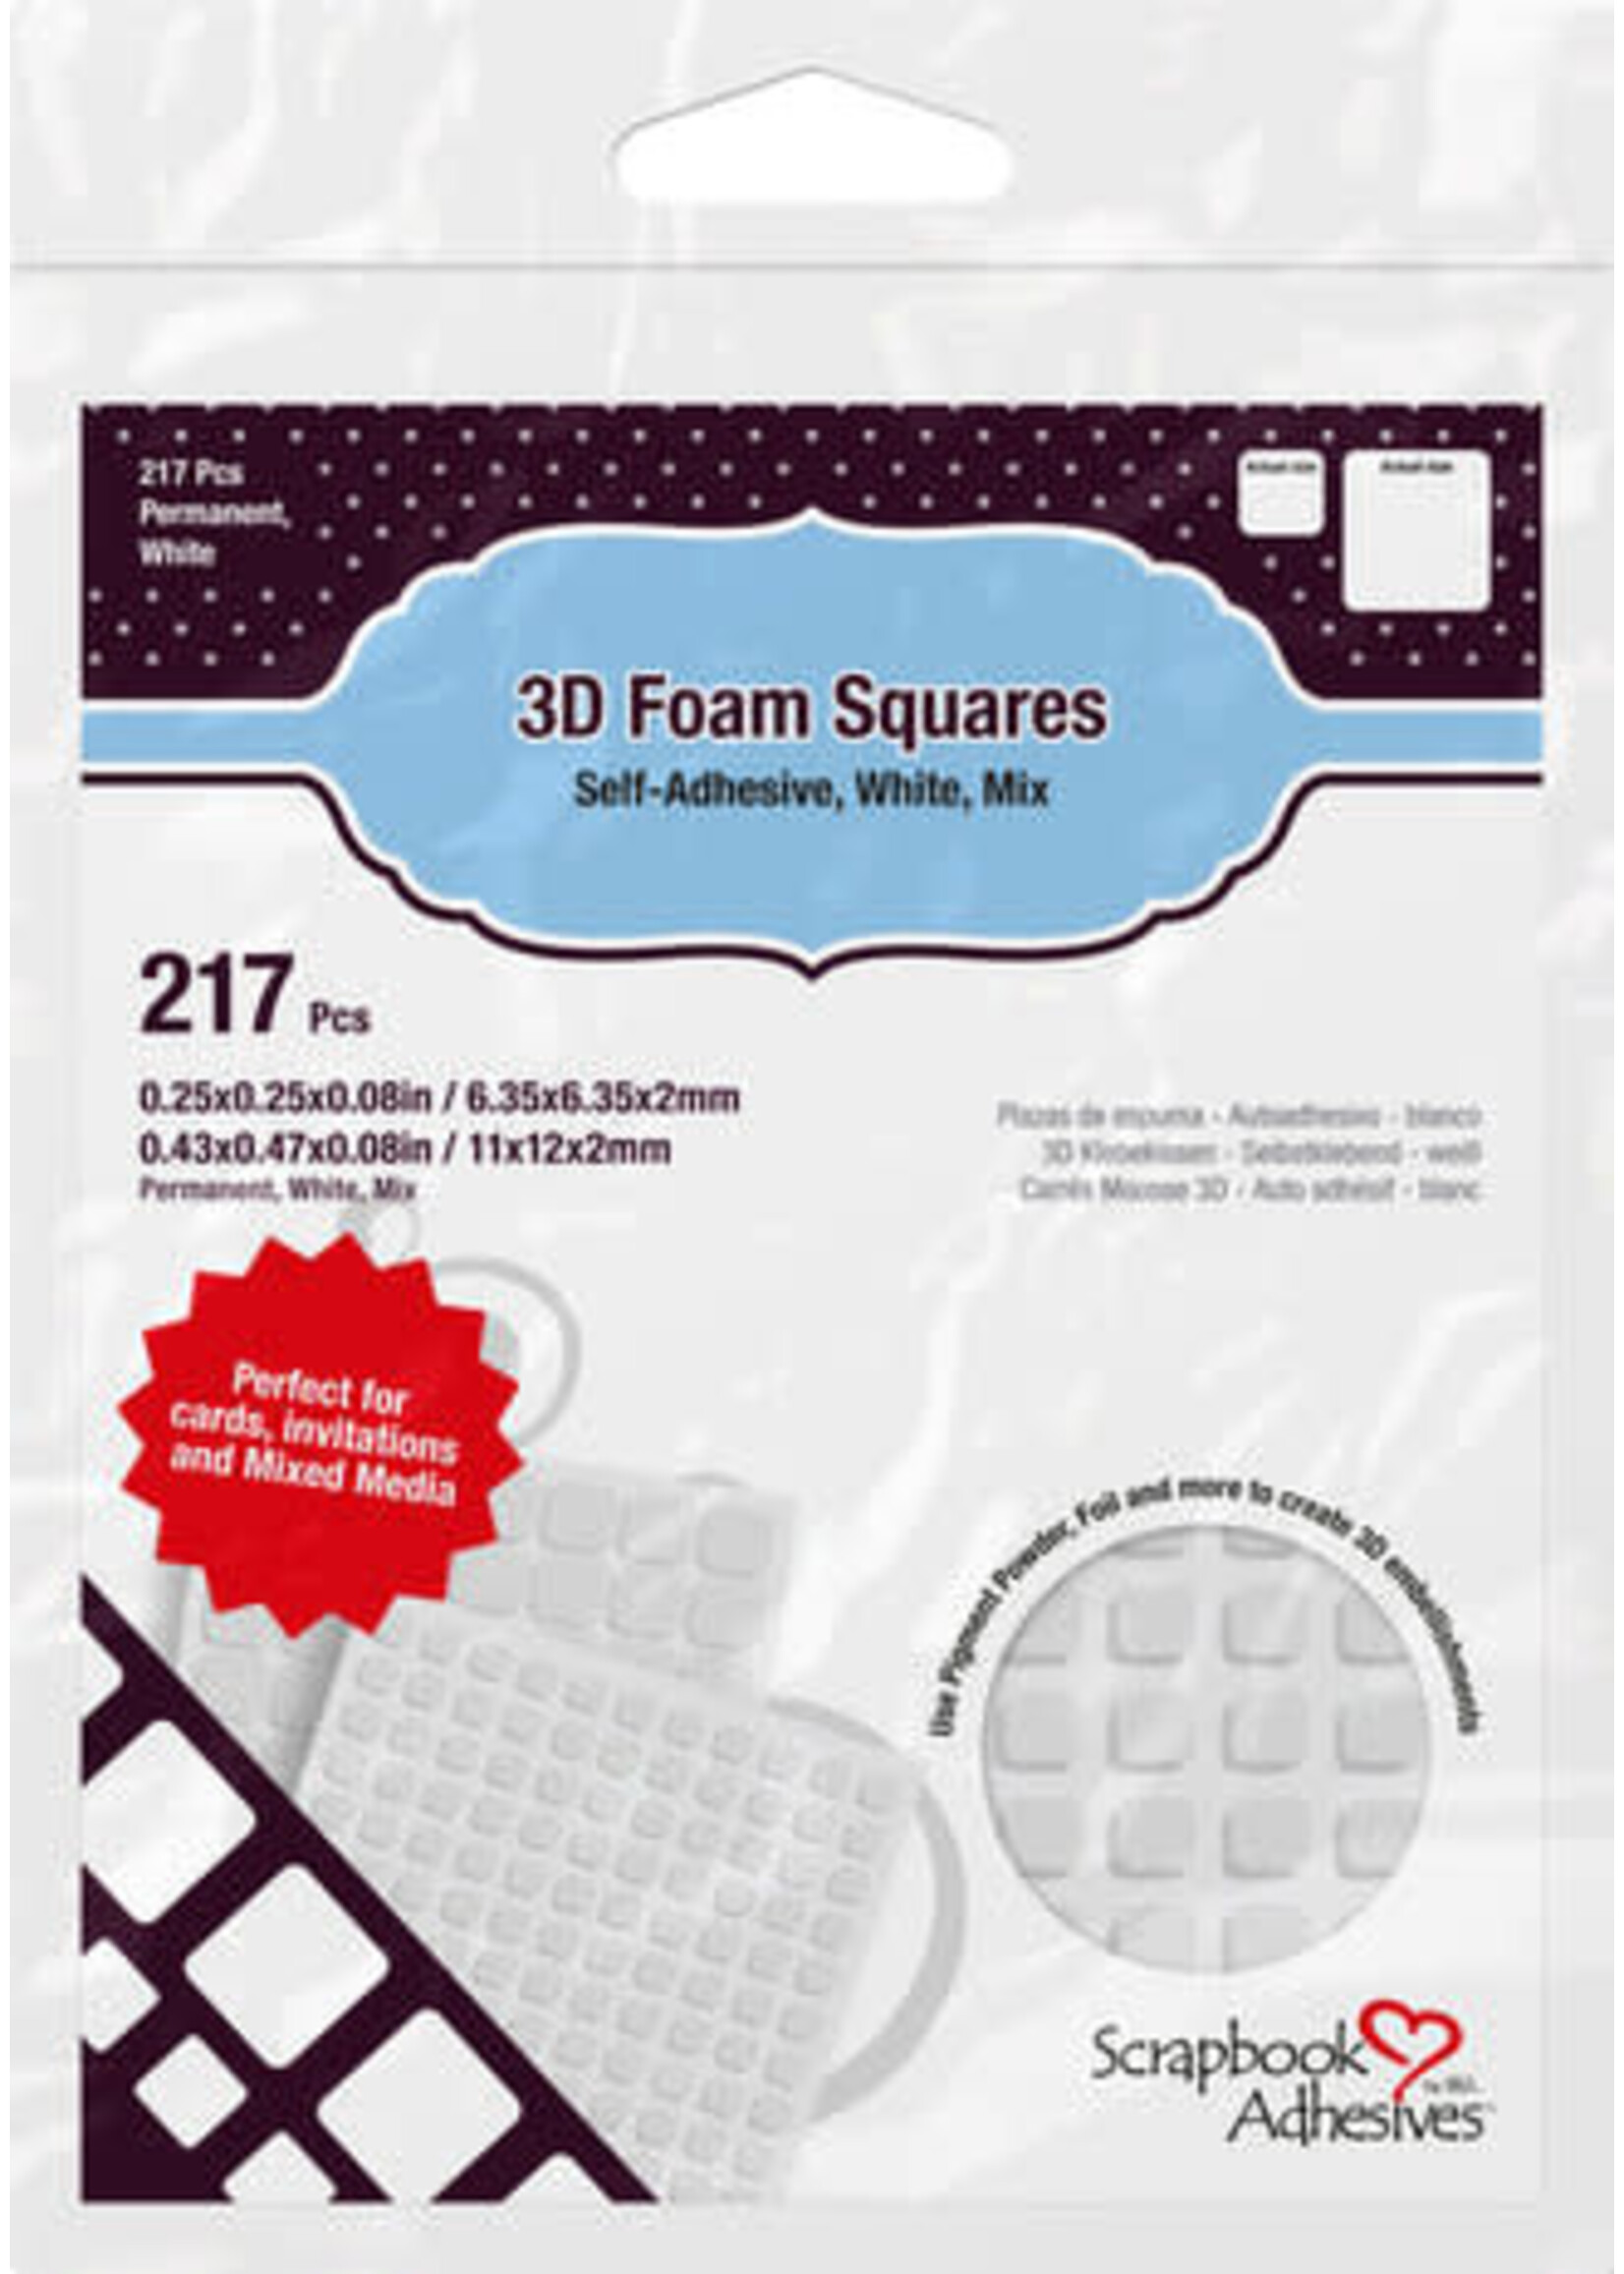 Scrapbook Adhesives 3D Foam Squares White Mix (217pcs) (01614)